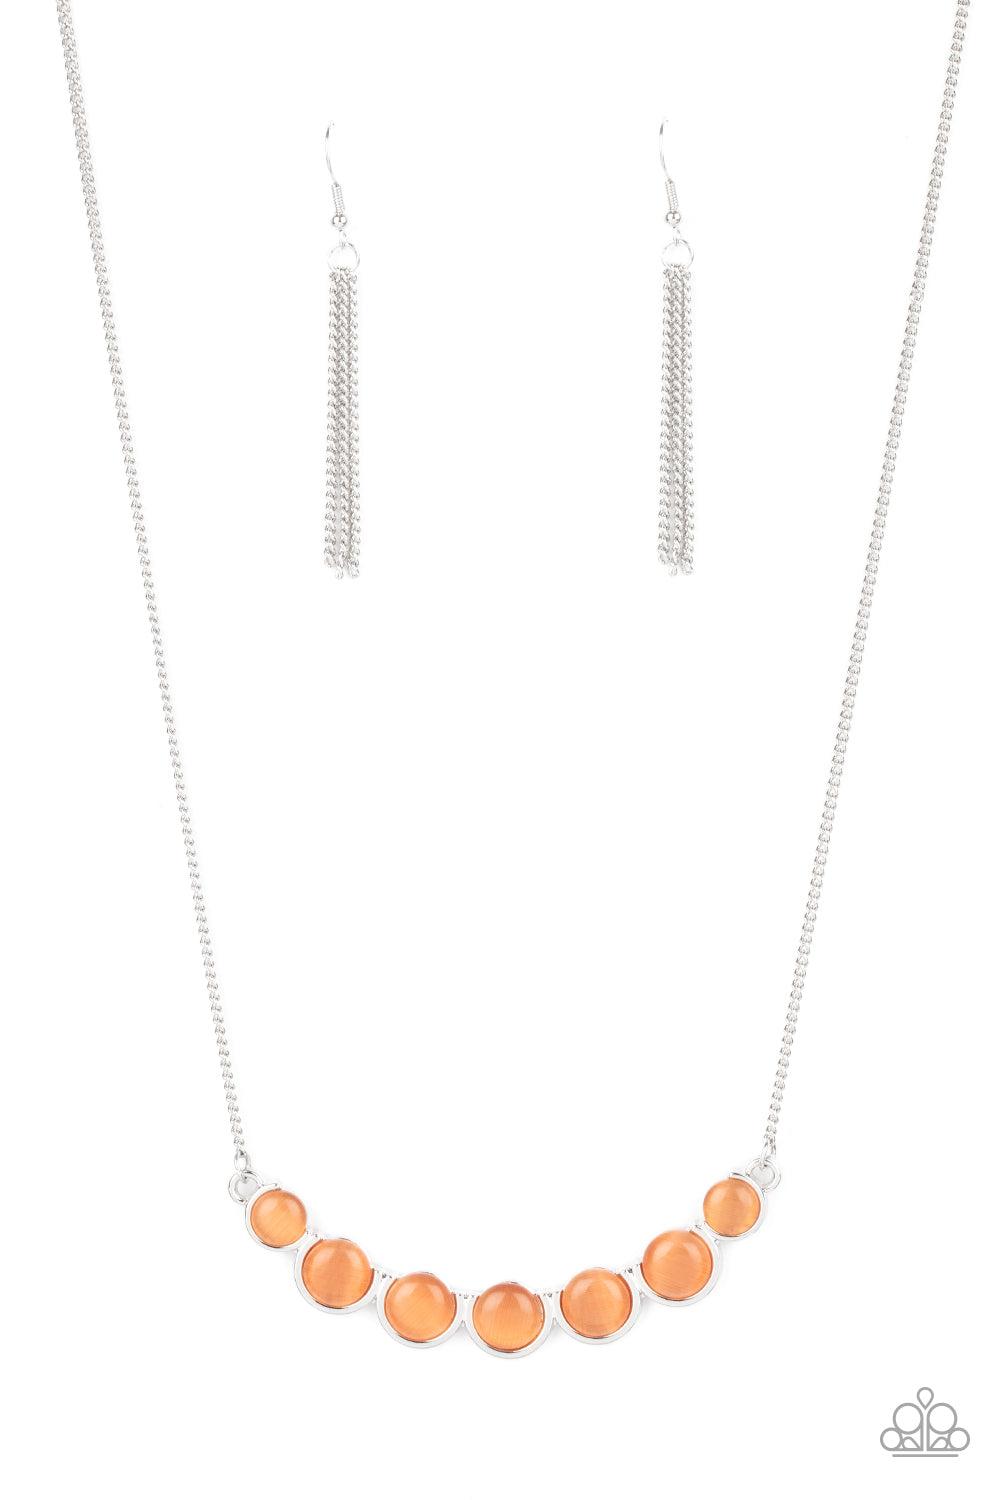 Serenely Scalloped - Orange Necklace